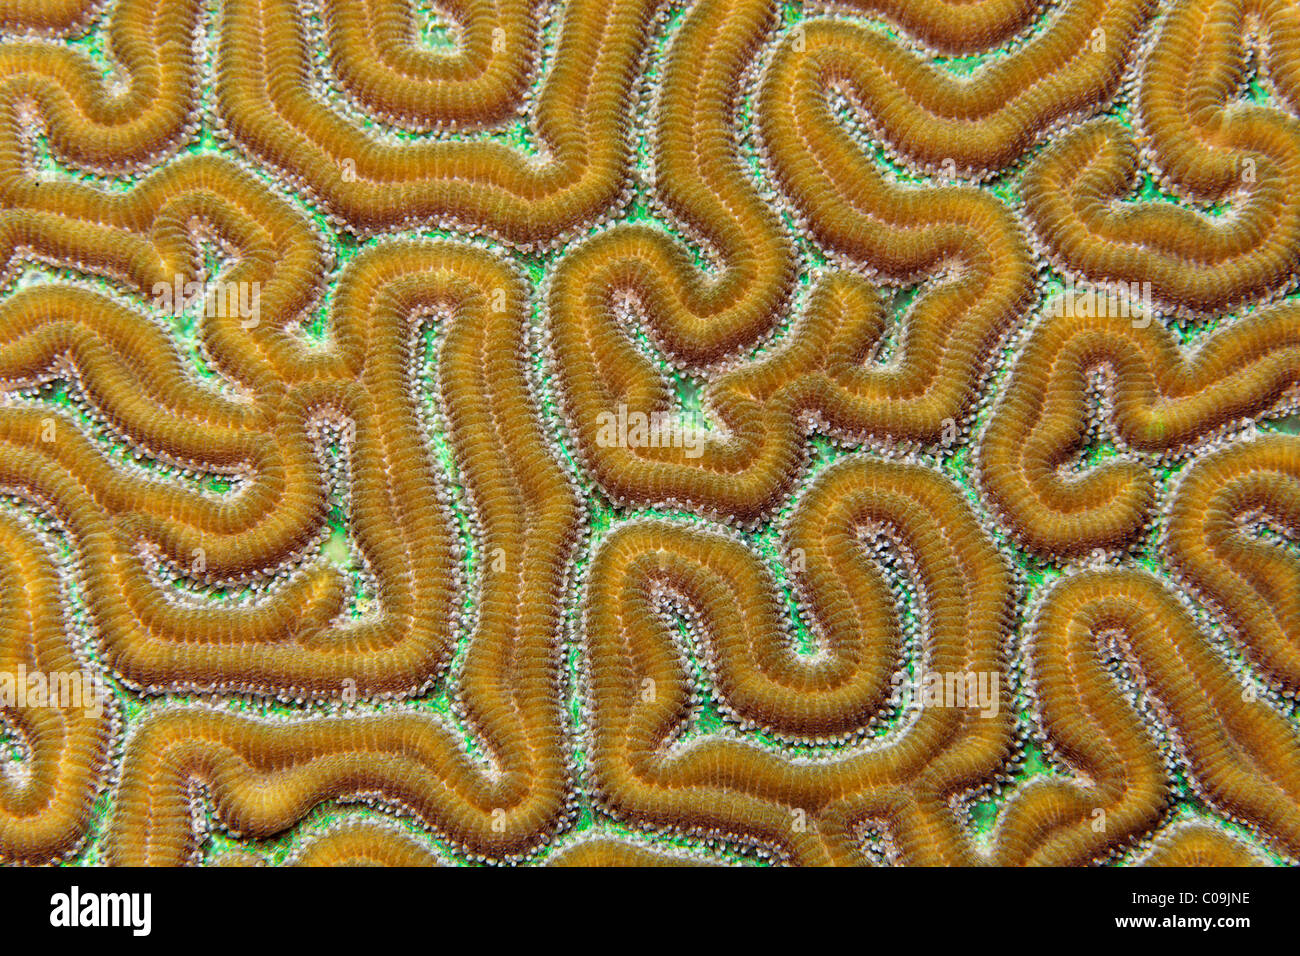 Brain Coral (Favia sp.) Little Tobago, Speyside, Trinidad and Tobago, Lesser Antilles, Caribbean Sea Stock Photo